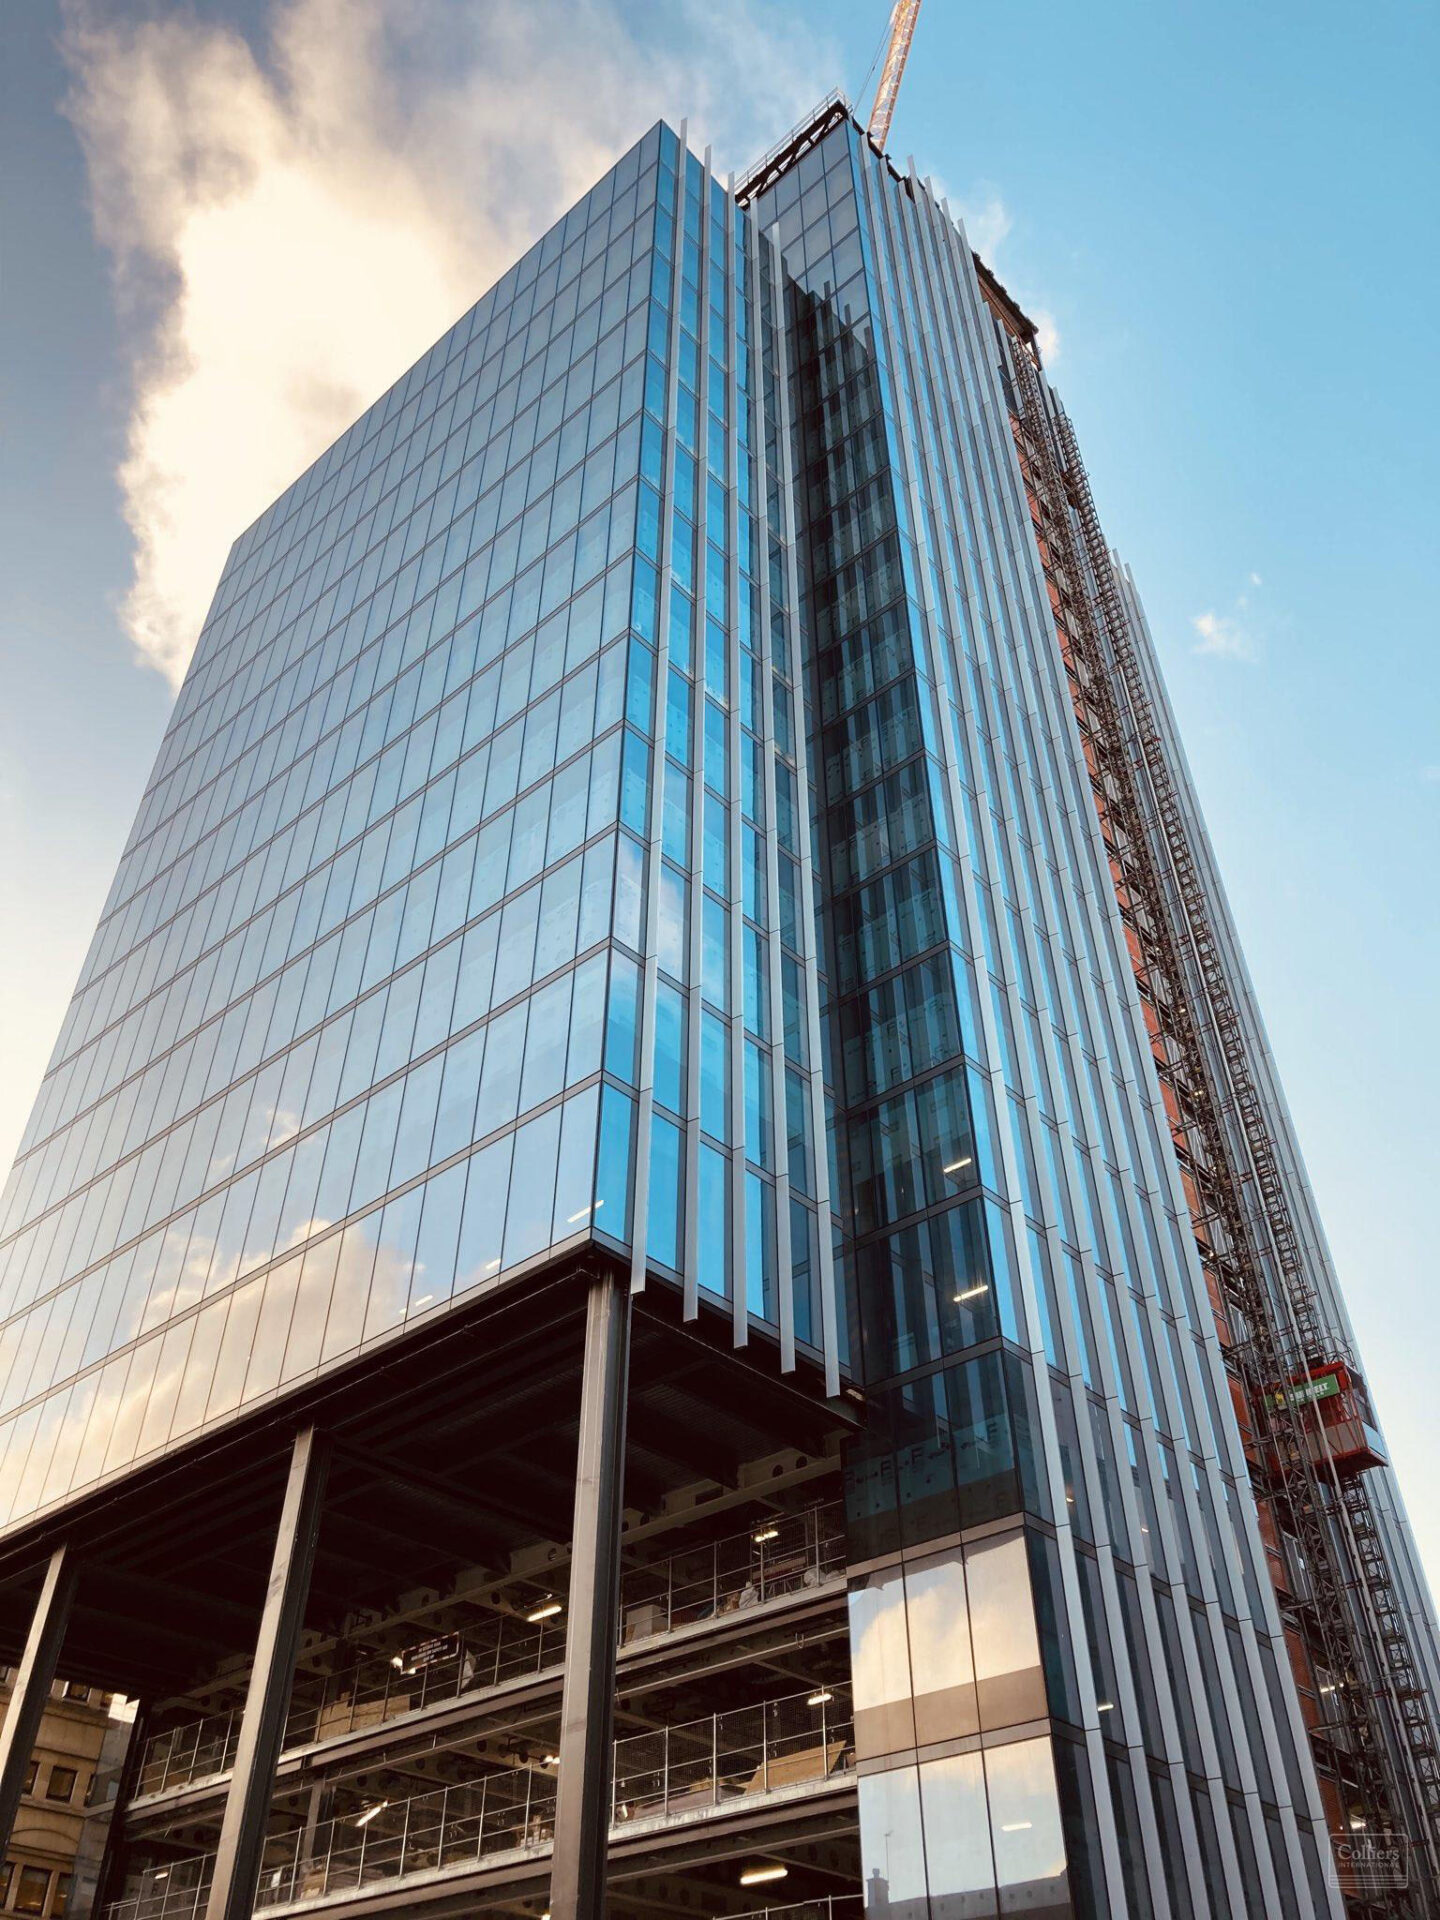 103 Colmore Row is Birmingham's tallest building